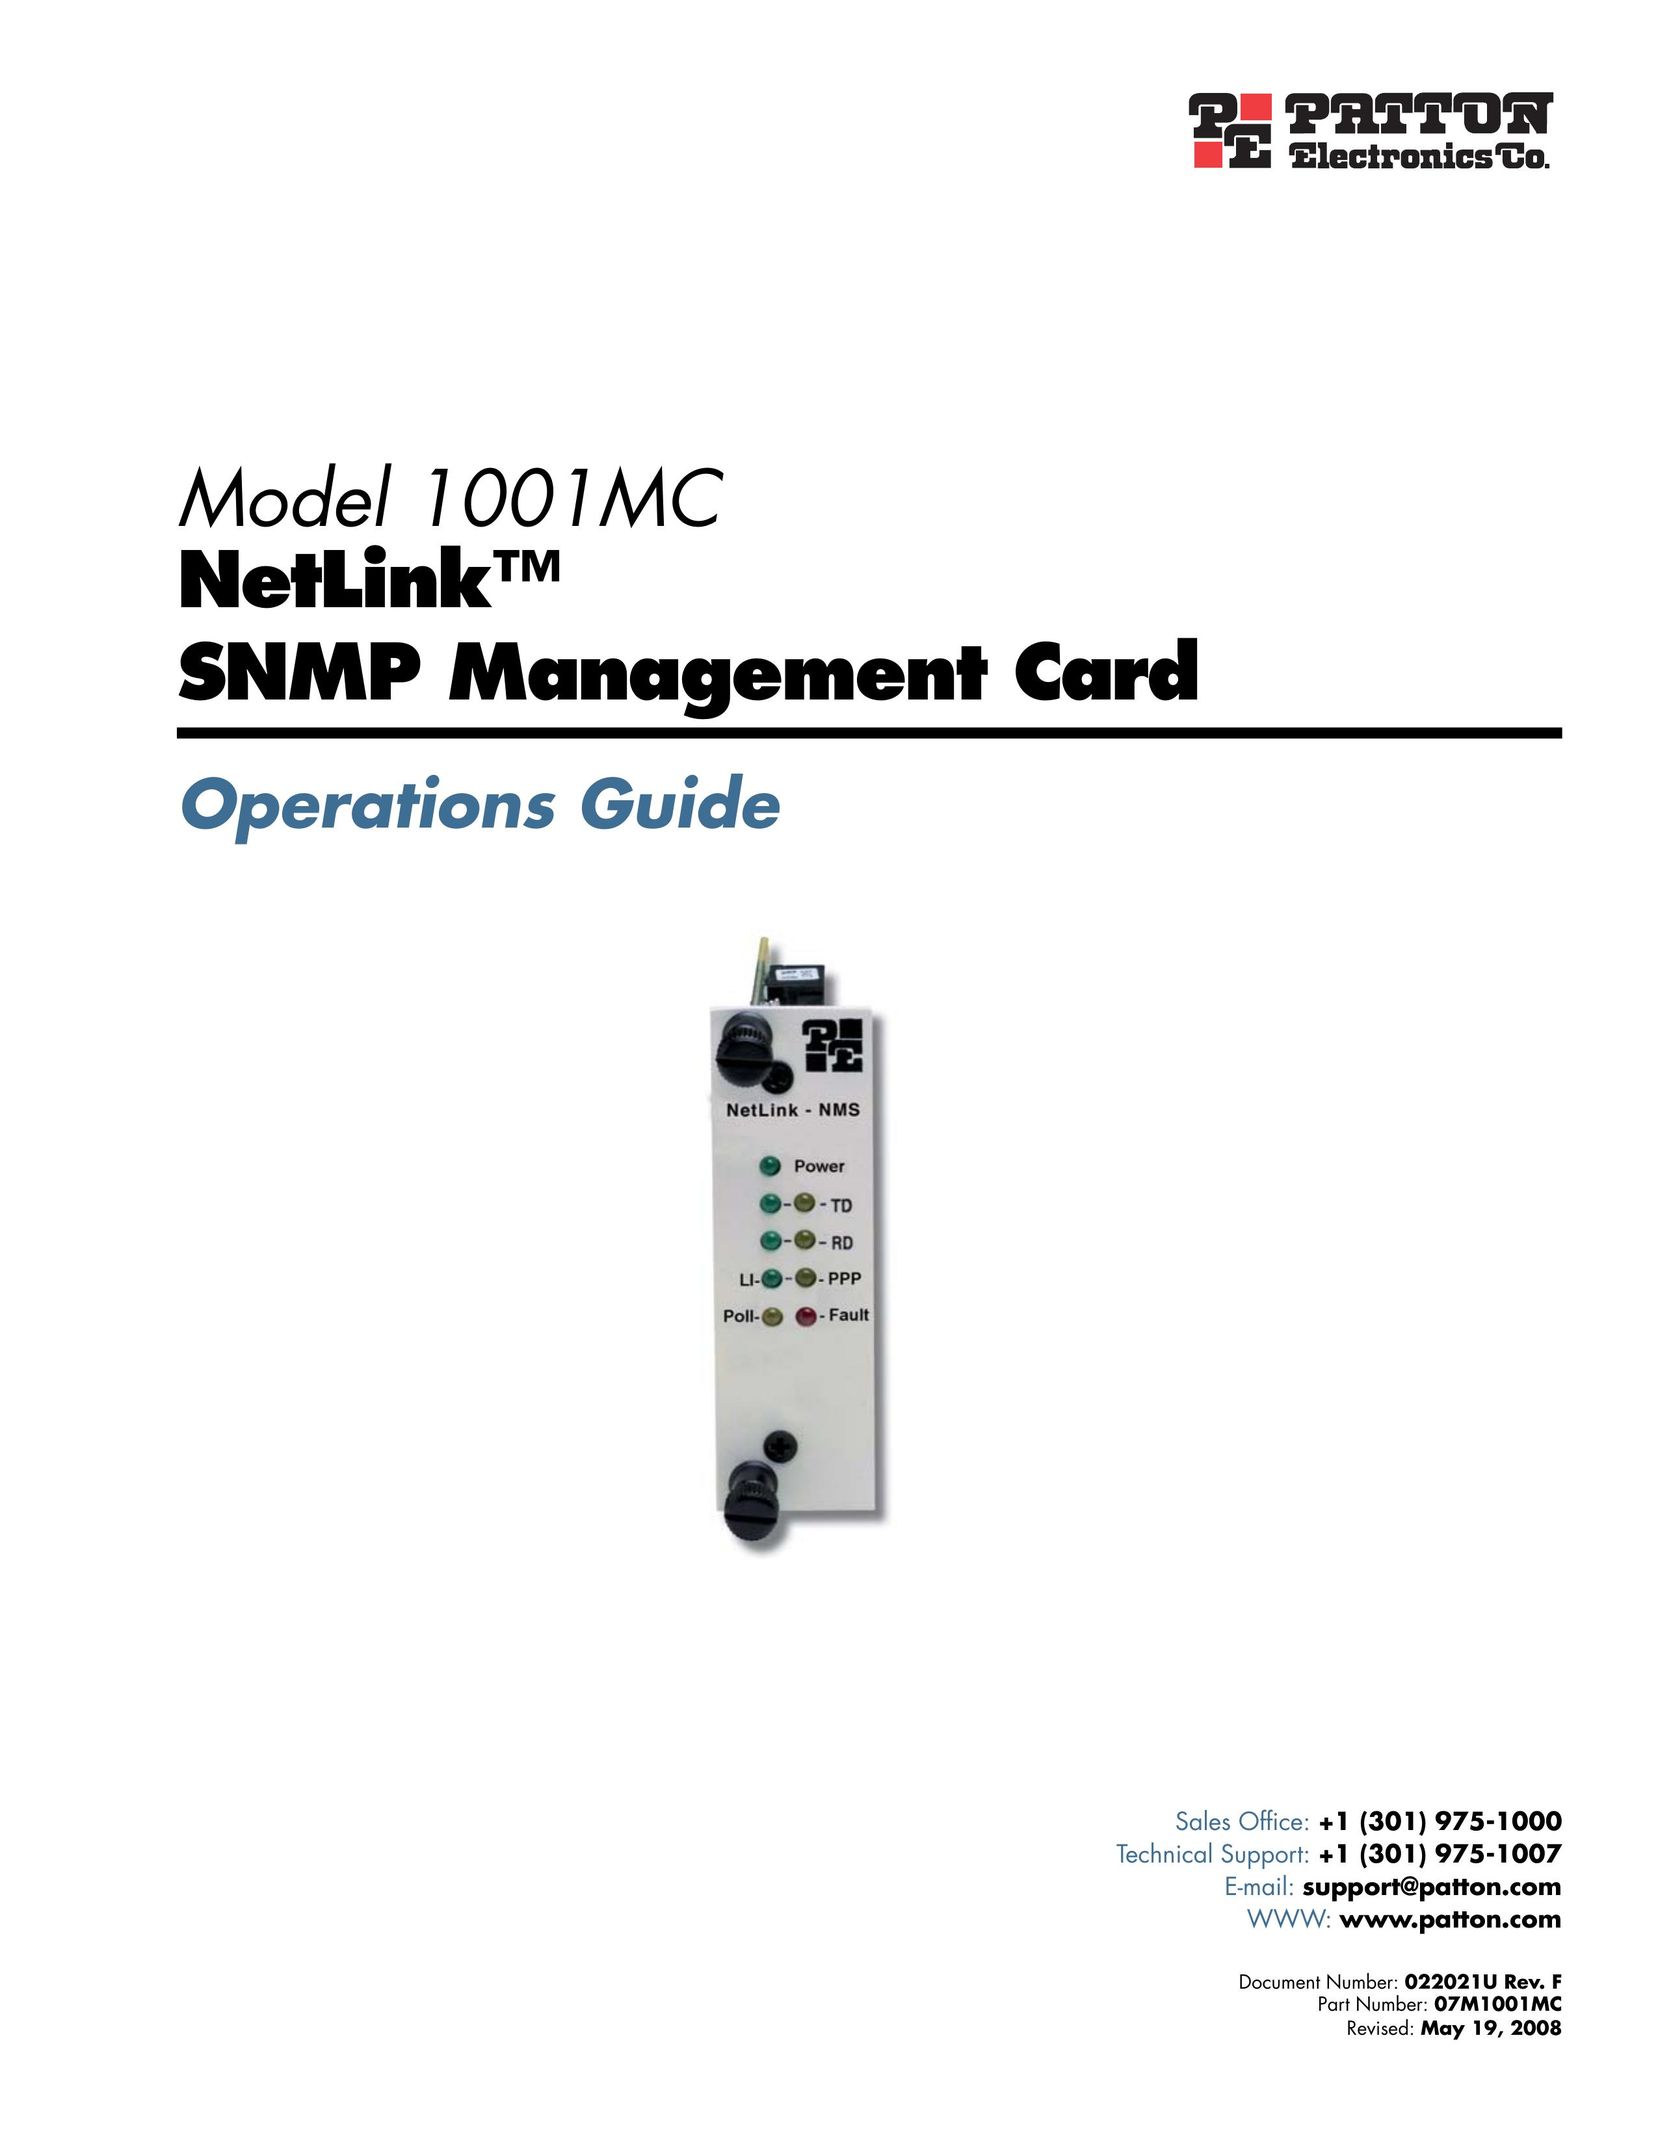 Patton electronic 1001MC Card Game User Manual